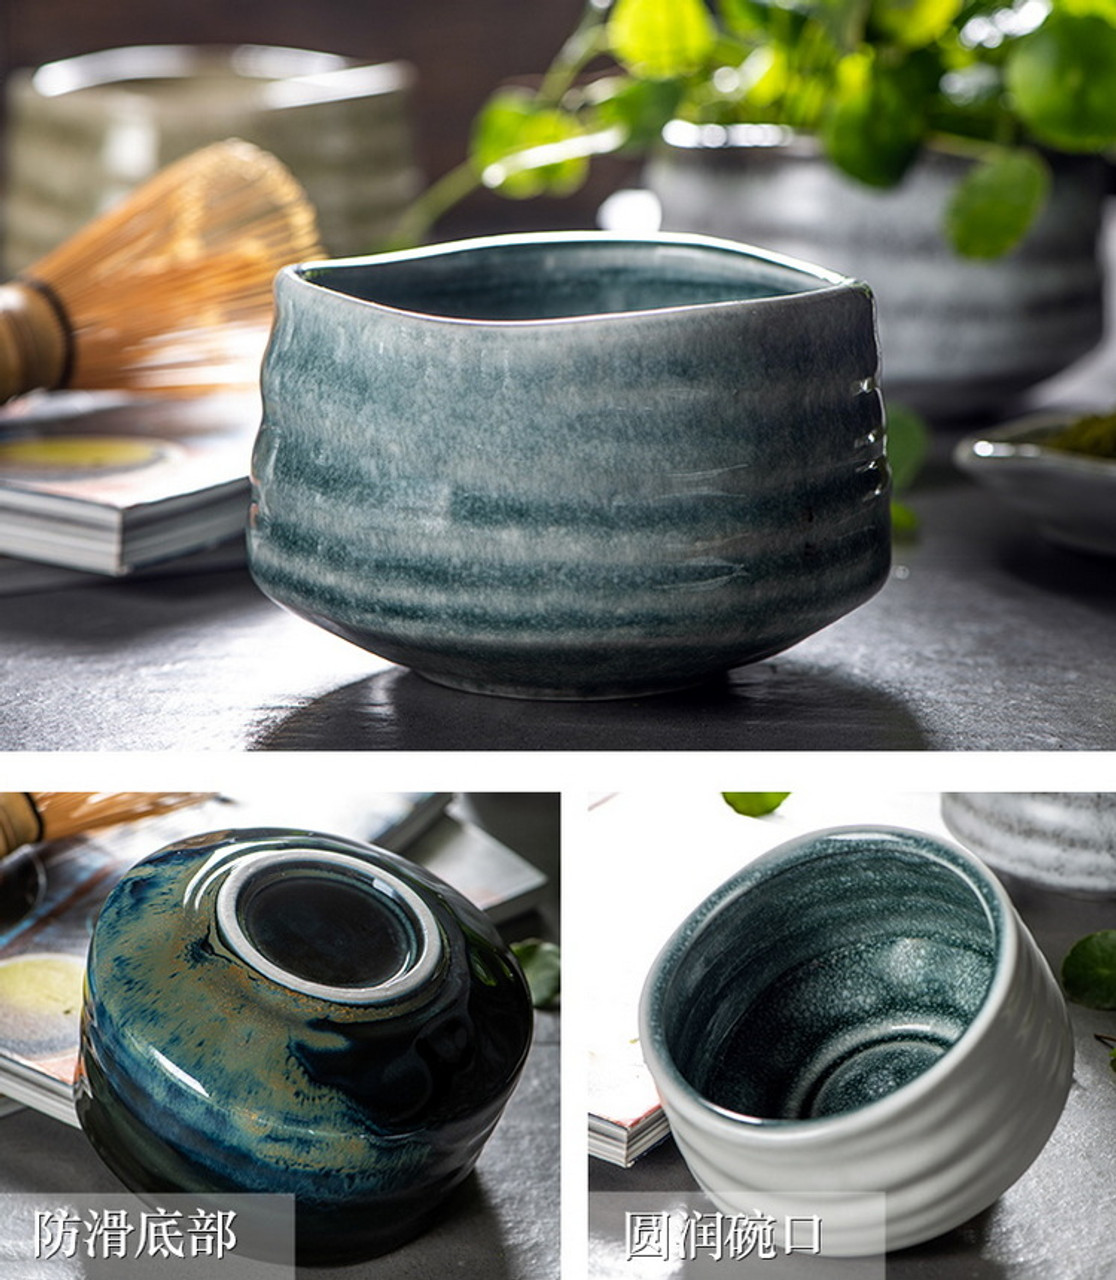 AIYICIII Ceramic Matcha Bowl, Handmade Japanese Green Tea Whisk Cup,Matcha  Tea Bowl For Ceremony Chawan 500ml 17oz (Matcha Green)